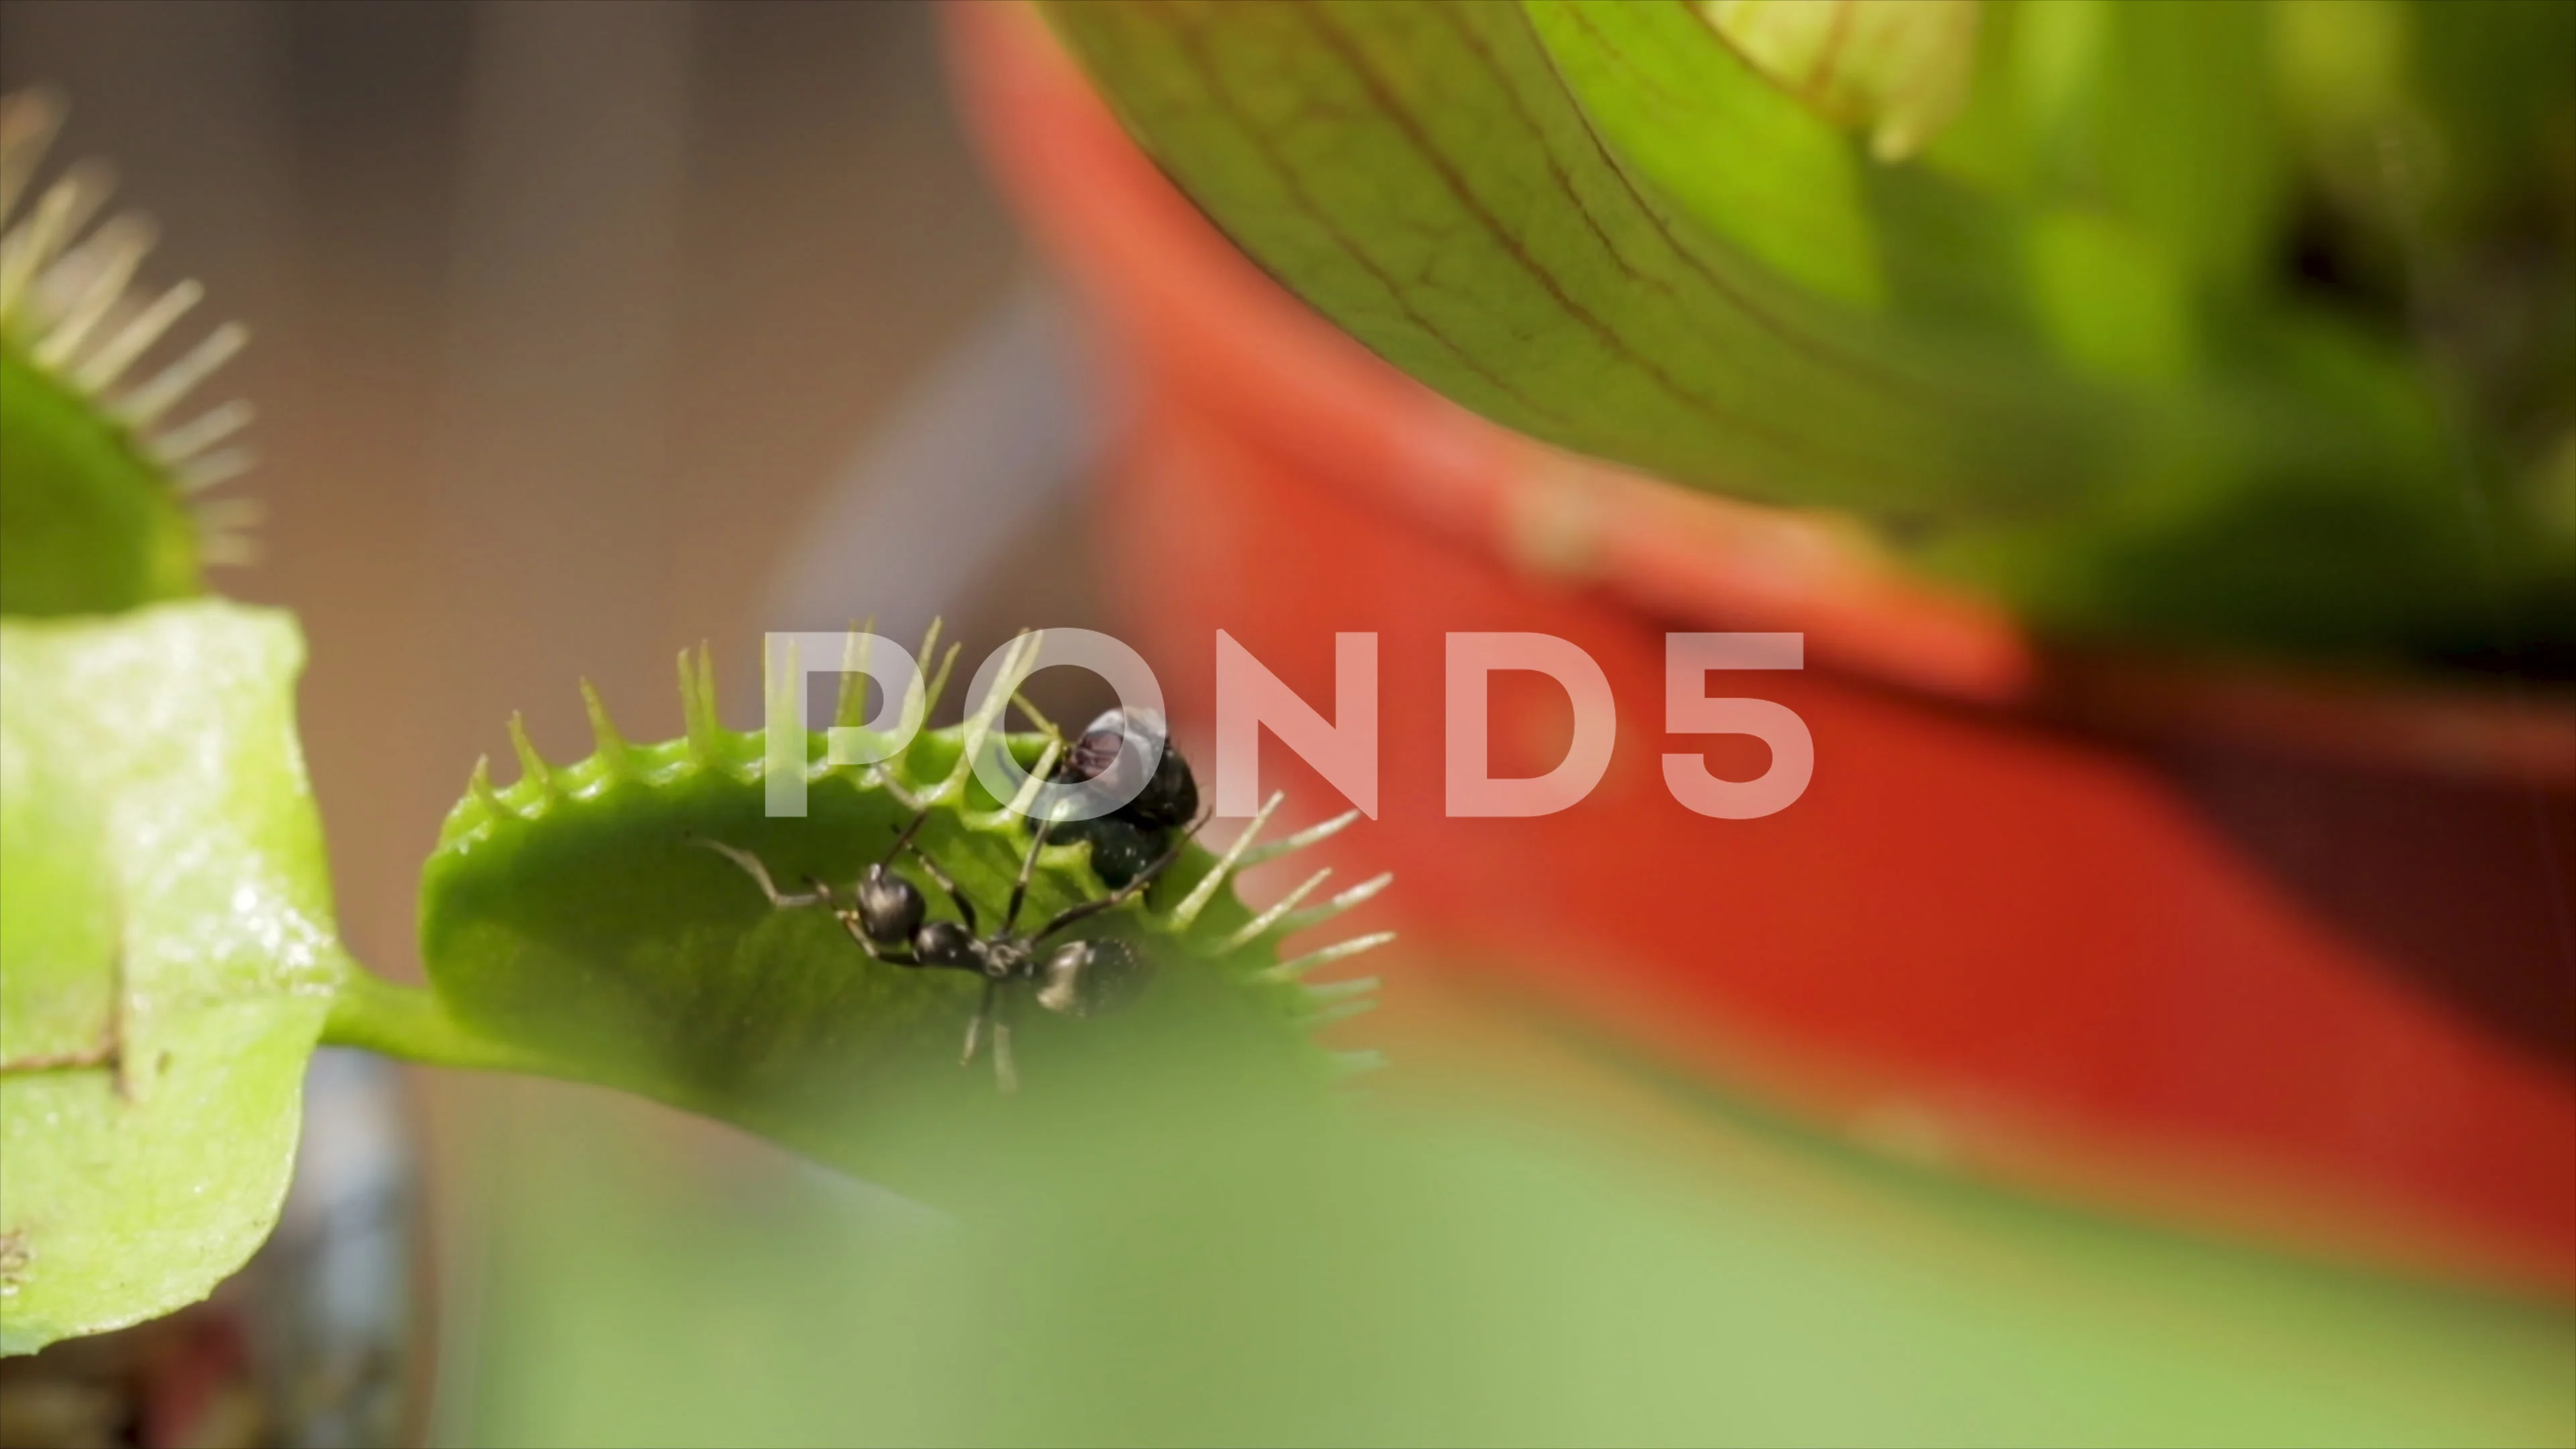 venus flytrap eating a person